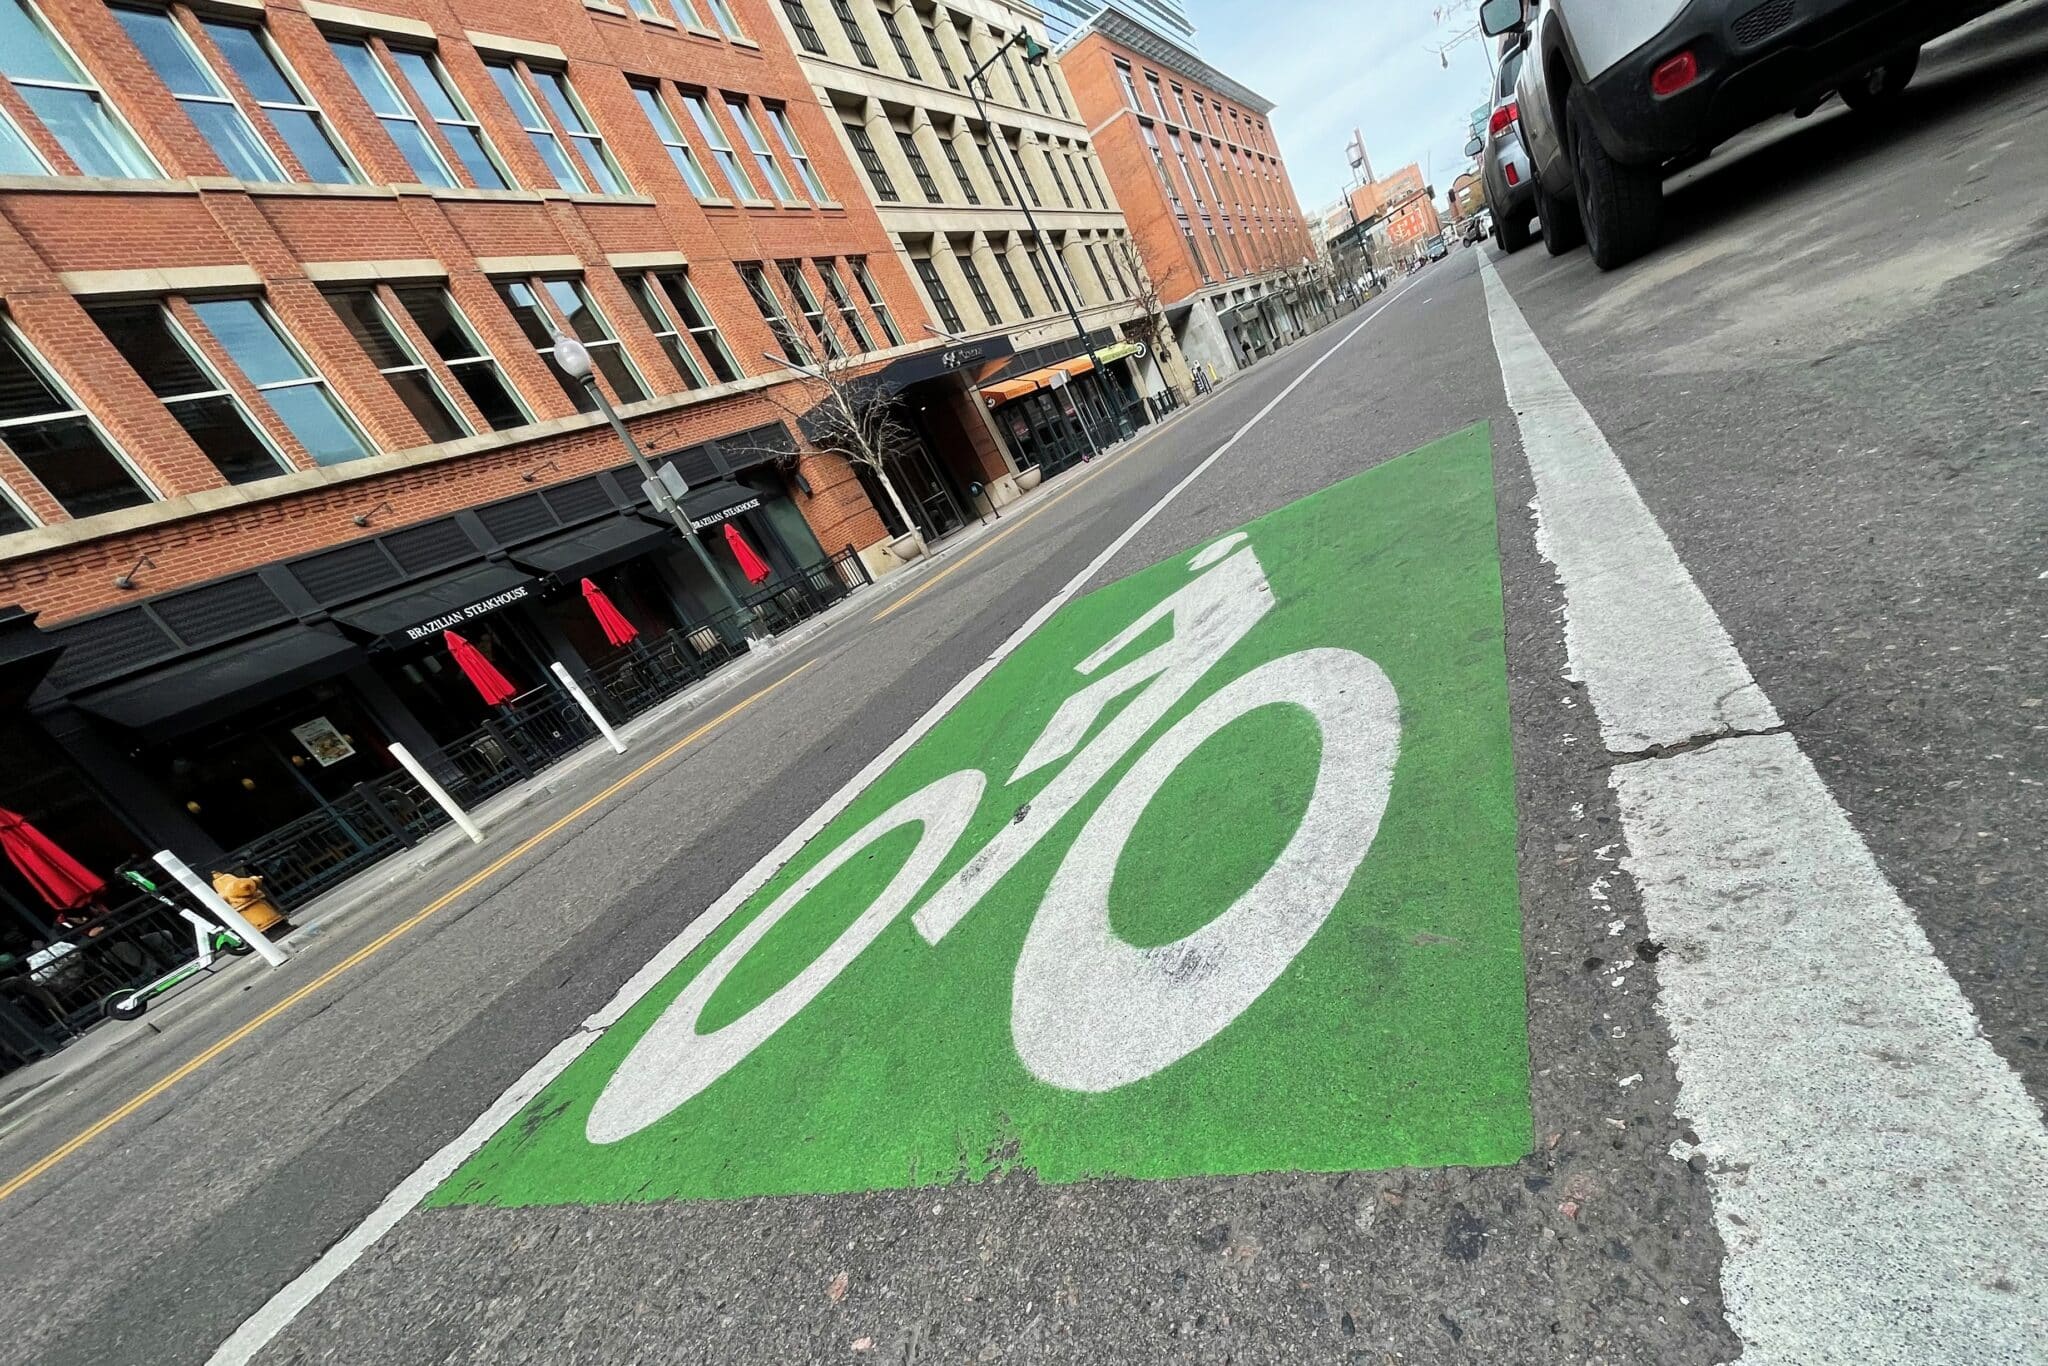 Denver adding bike lanes